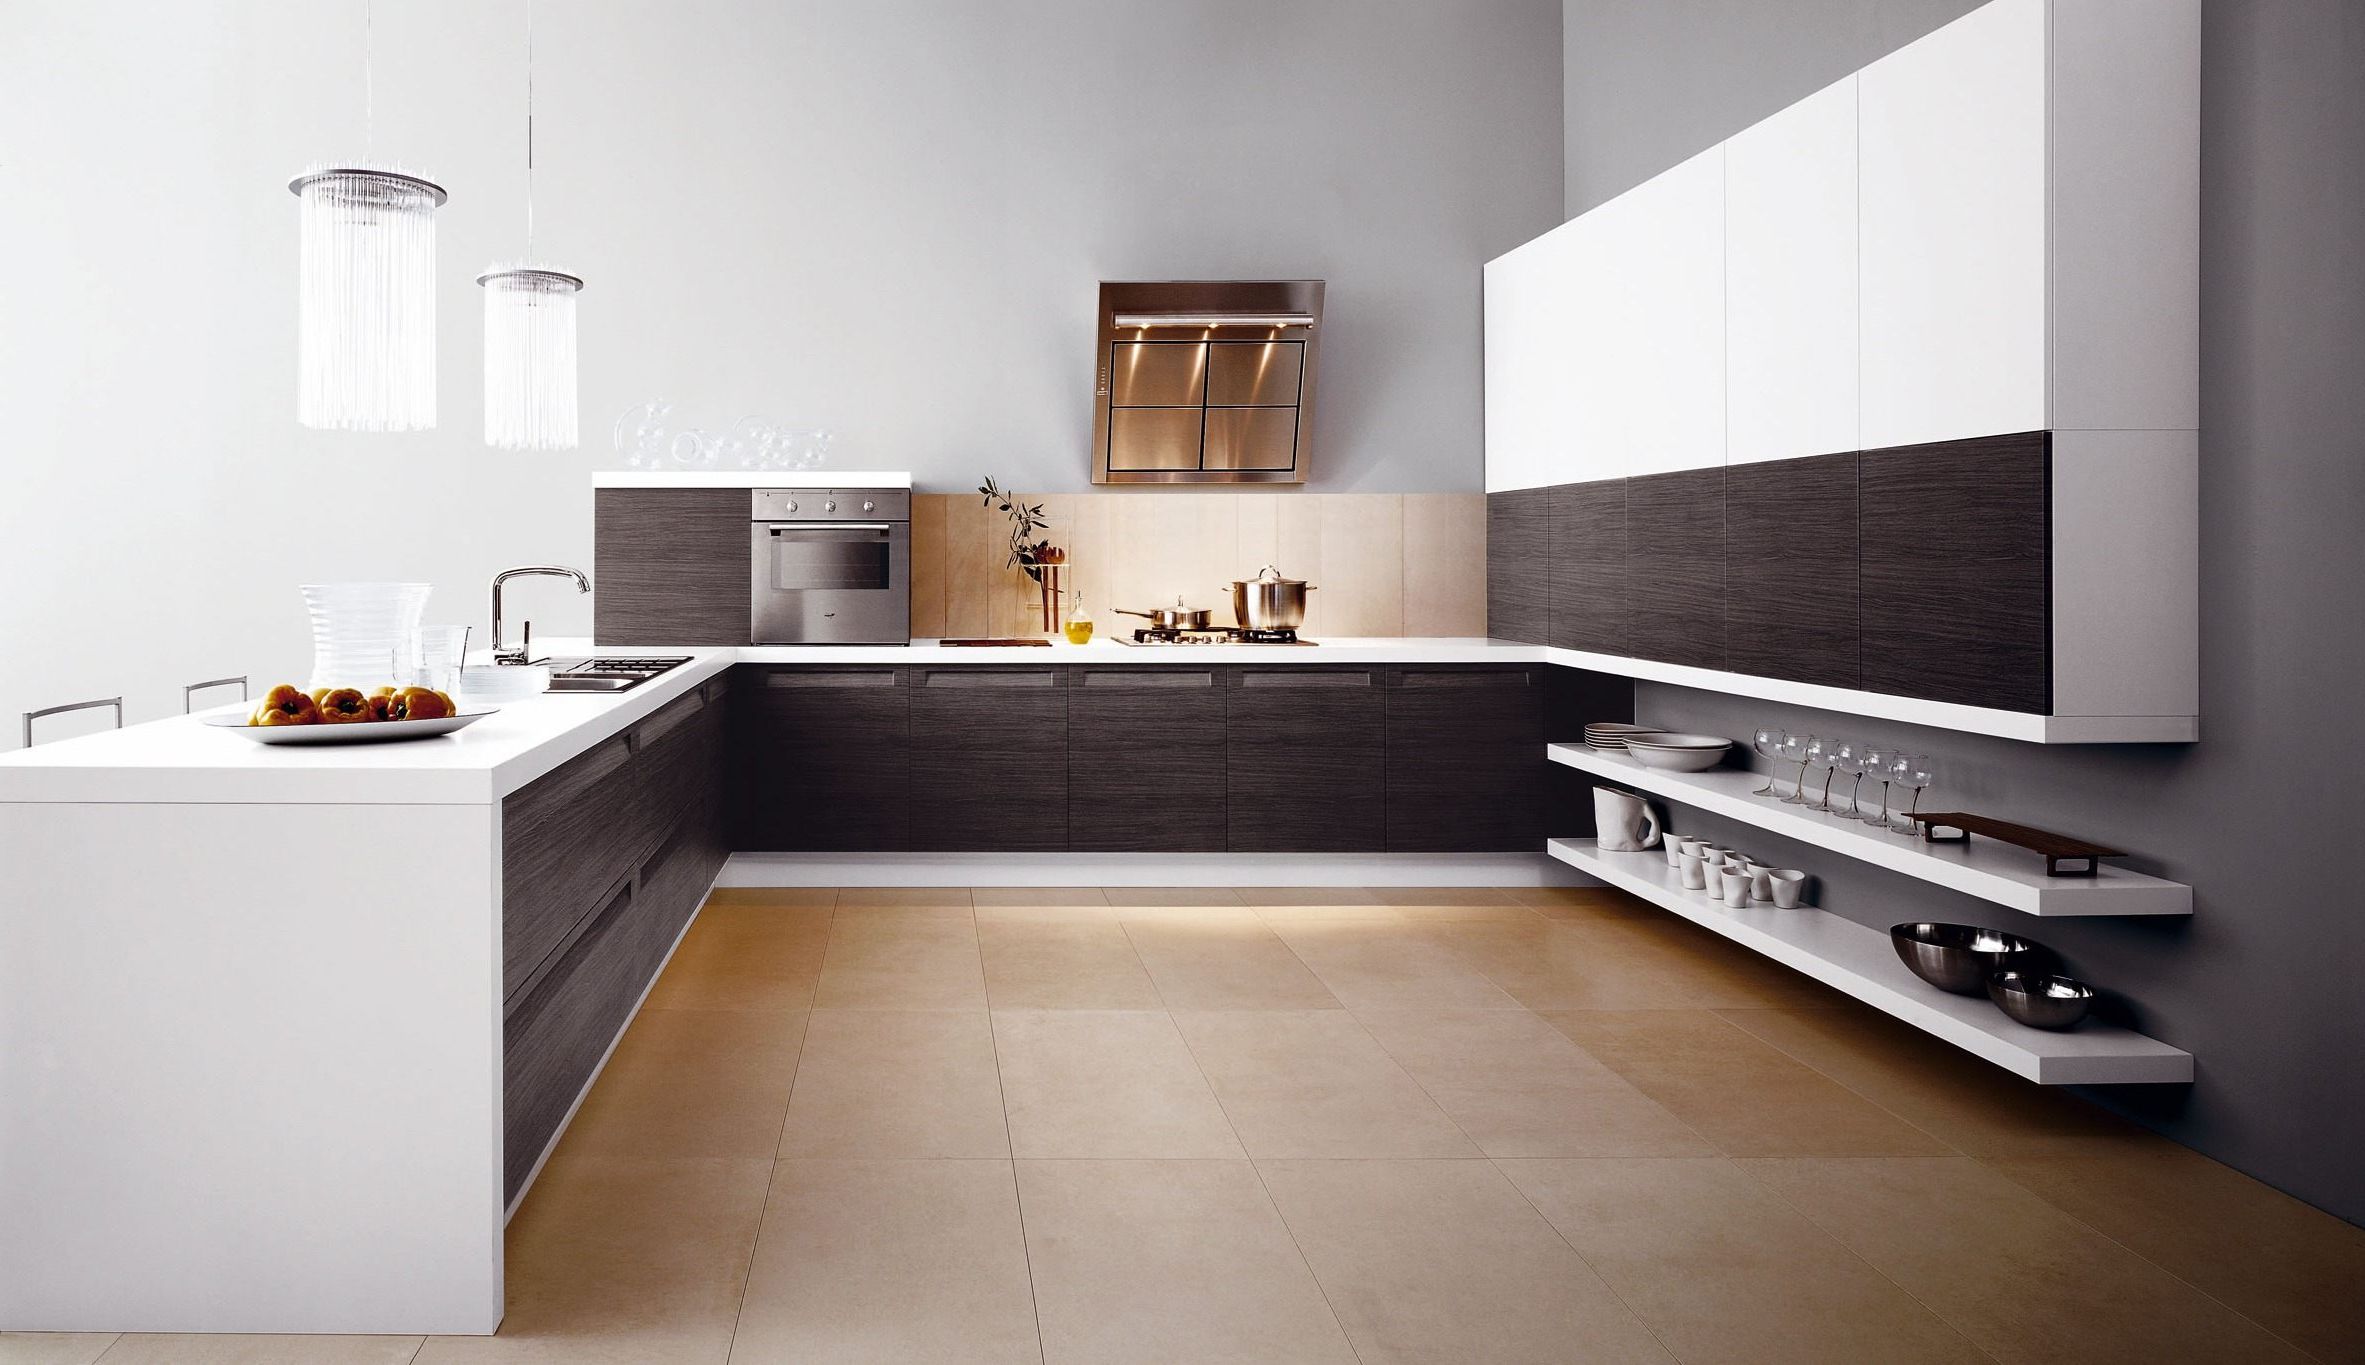 25 Cool Kitchen Design Trends 2015